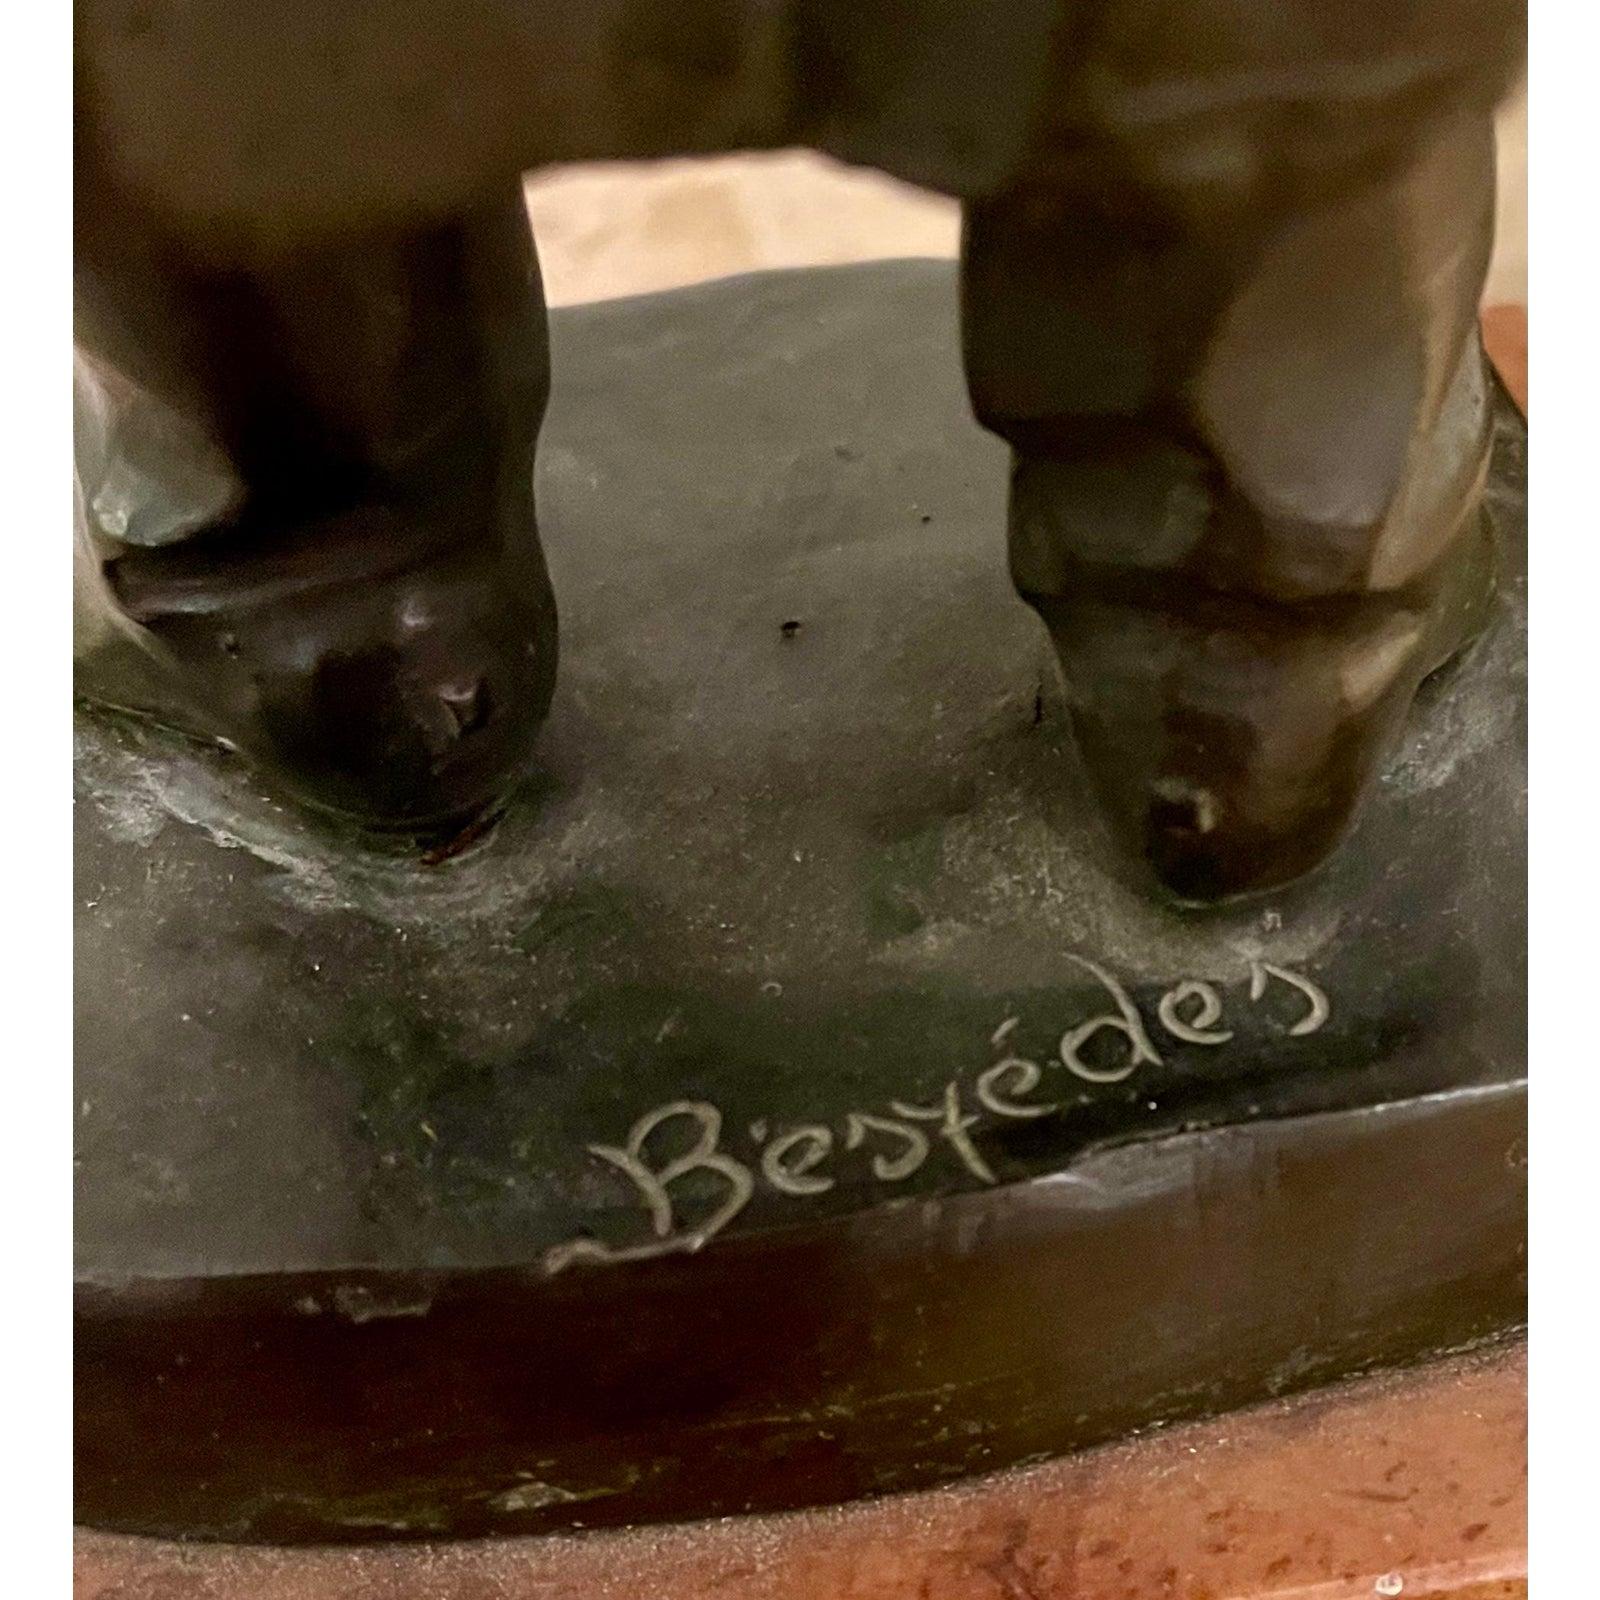 Antique Art Deco Hungarian bronze sculpture the Scholar by Laslo Janos Beszedes

Additional information:
Materials: Bronze
Color: Bronze
Period: 1910s
Styles: Art Deco
Art Subjects: Figure
Item Type: Vintage, Antique or